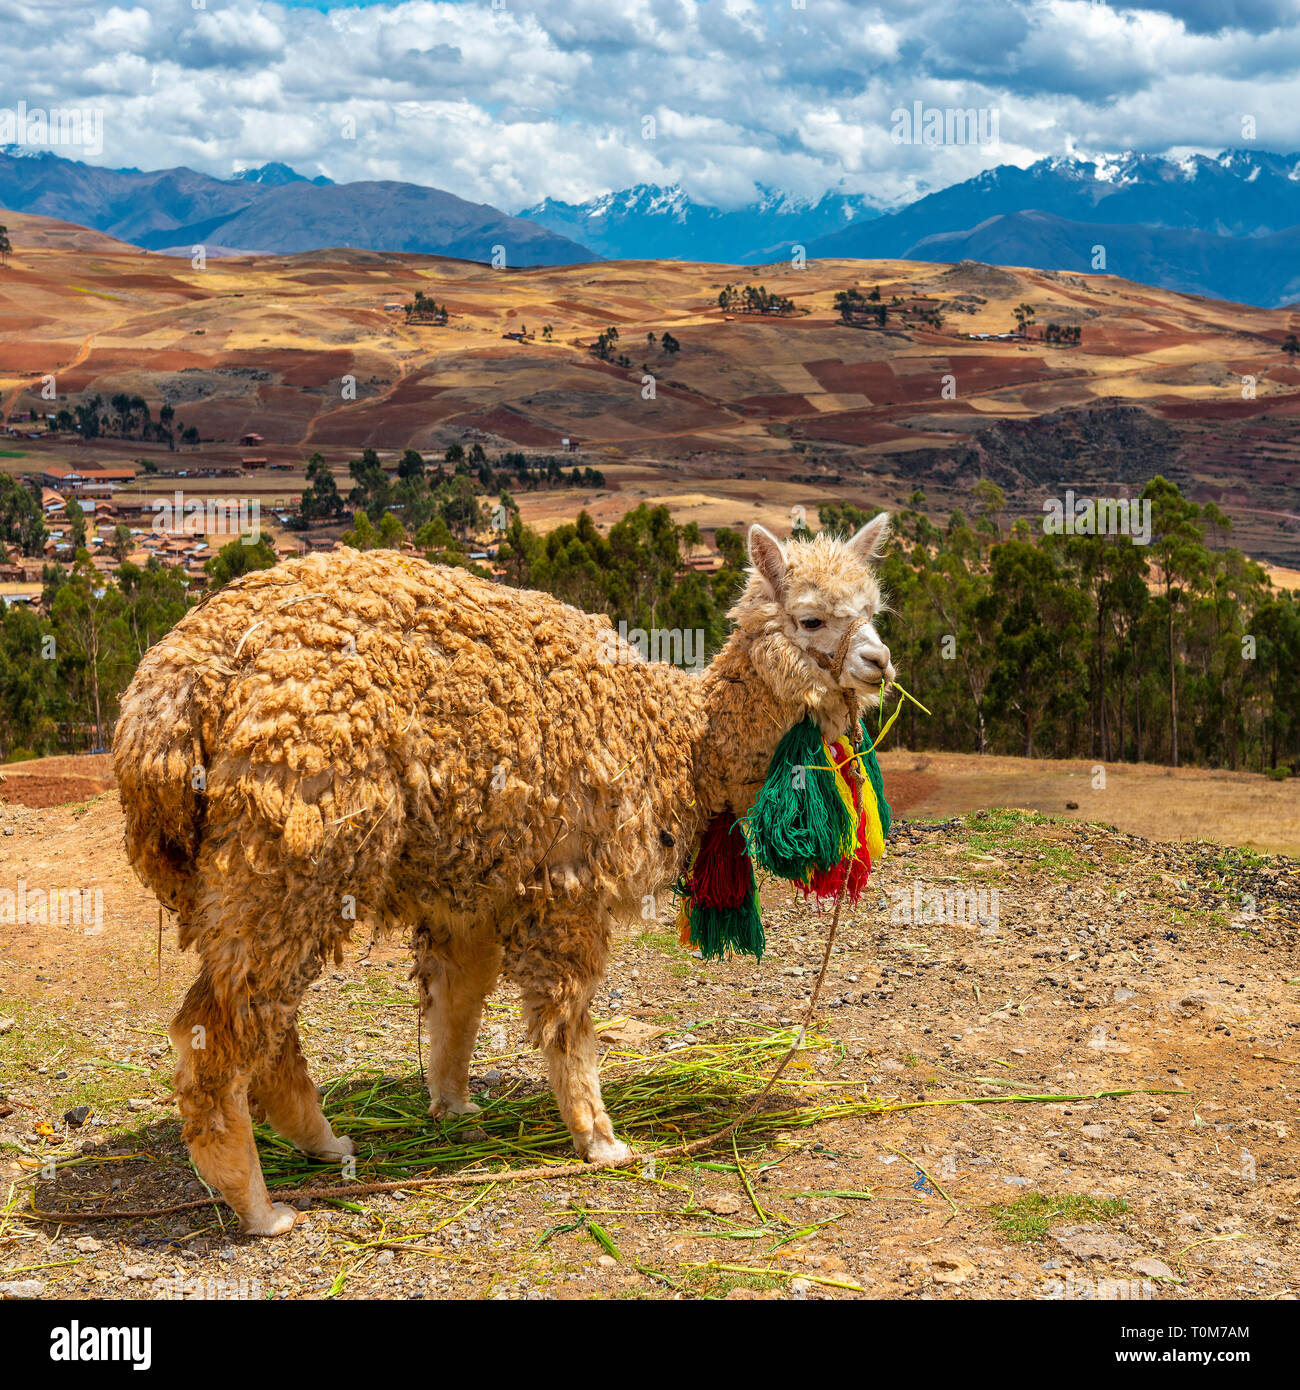 Farm Animals - Lama stock image. Image of peru, places - 31619695